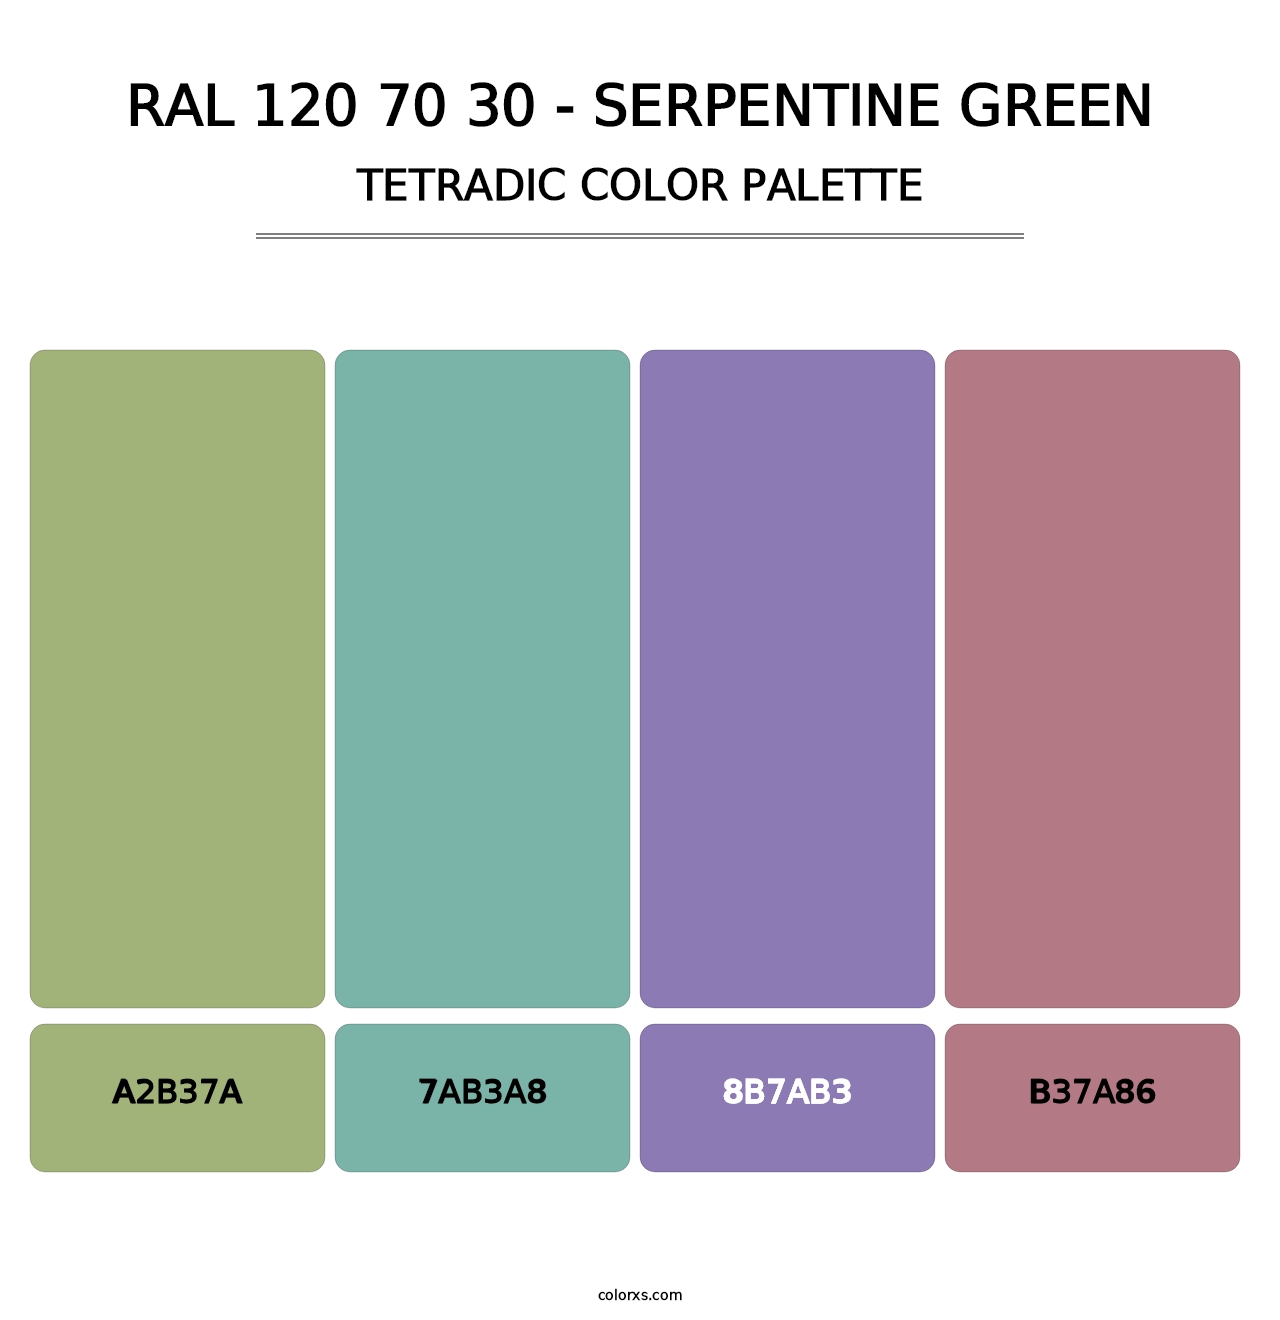 RAL 120 70 30 - Serpentine Green - Tetradic Color Palette